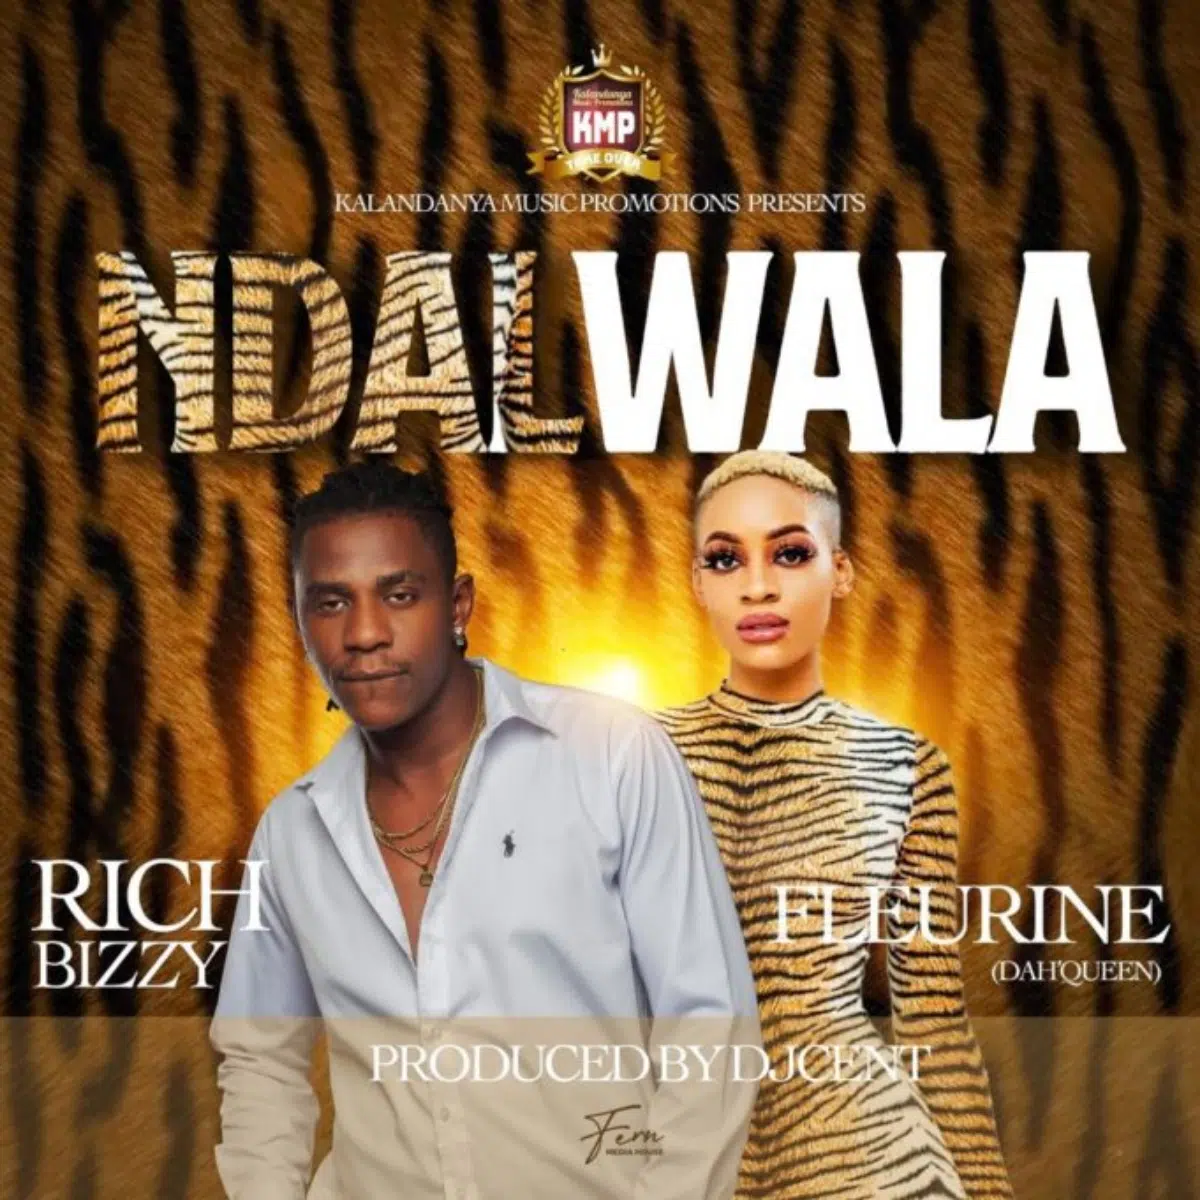 DOWNLOAD: Rich Bizzy Feat Fleurine – “Ndalwala” Mp3